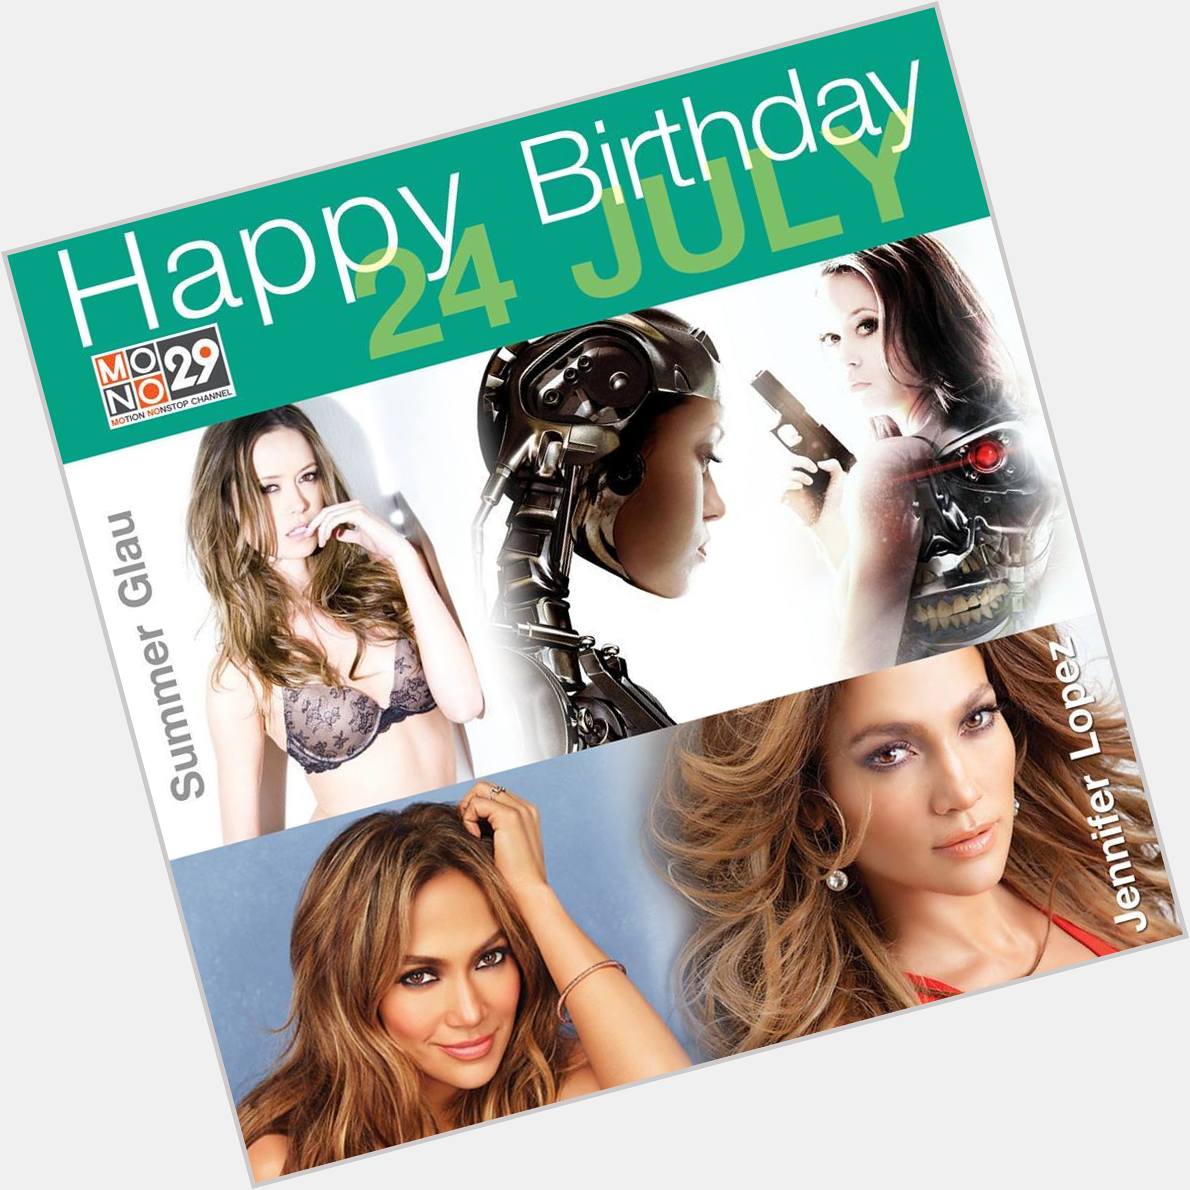 24 July Happy Birthday
- Summer Glau
- J.Lo    Jennifer Lopez 